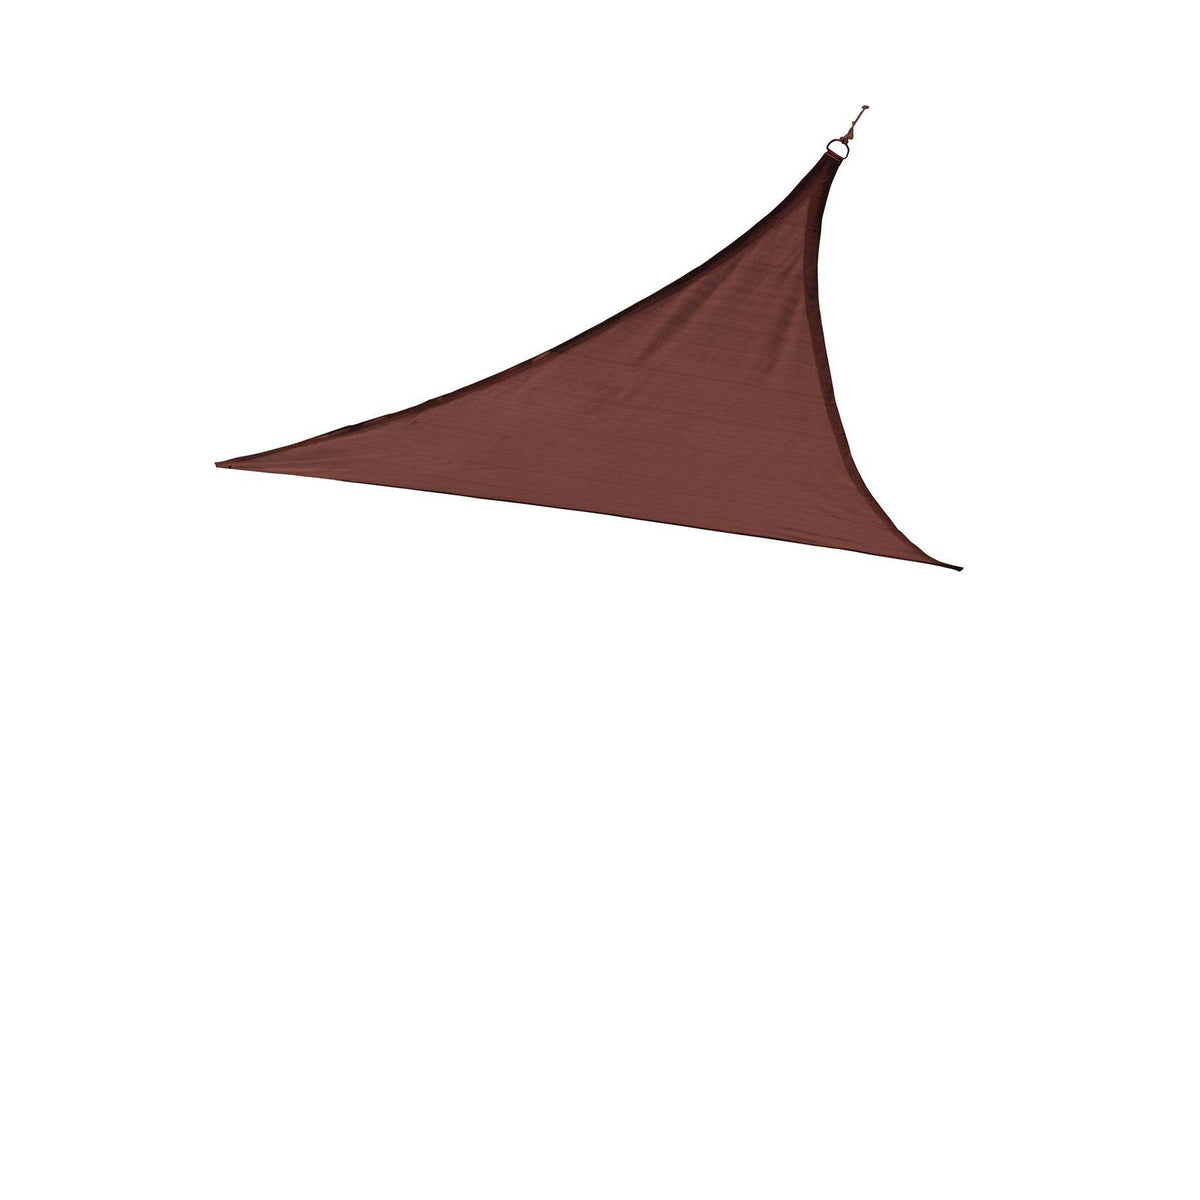 ShelterLogic Triangle Shade Sail, Terracotta, 12 x 12 x 12 ft.